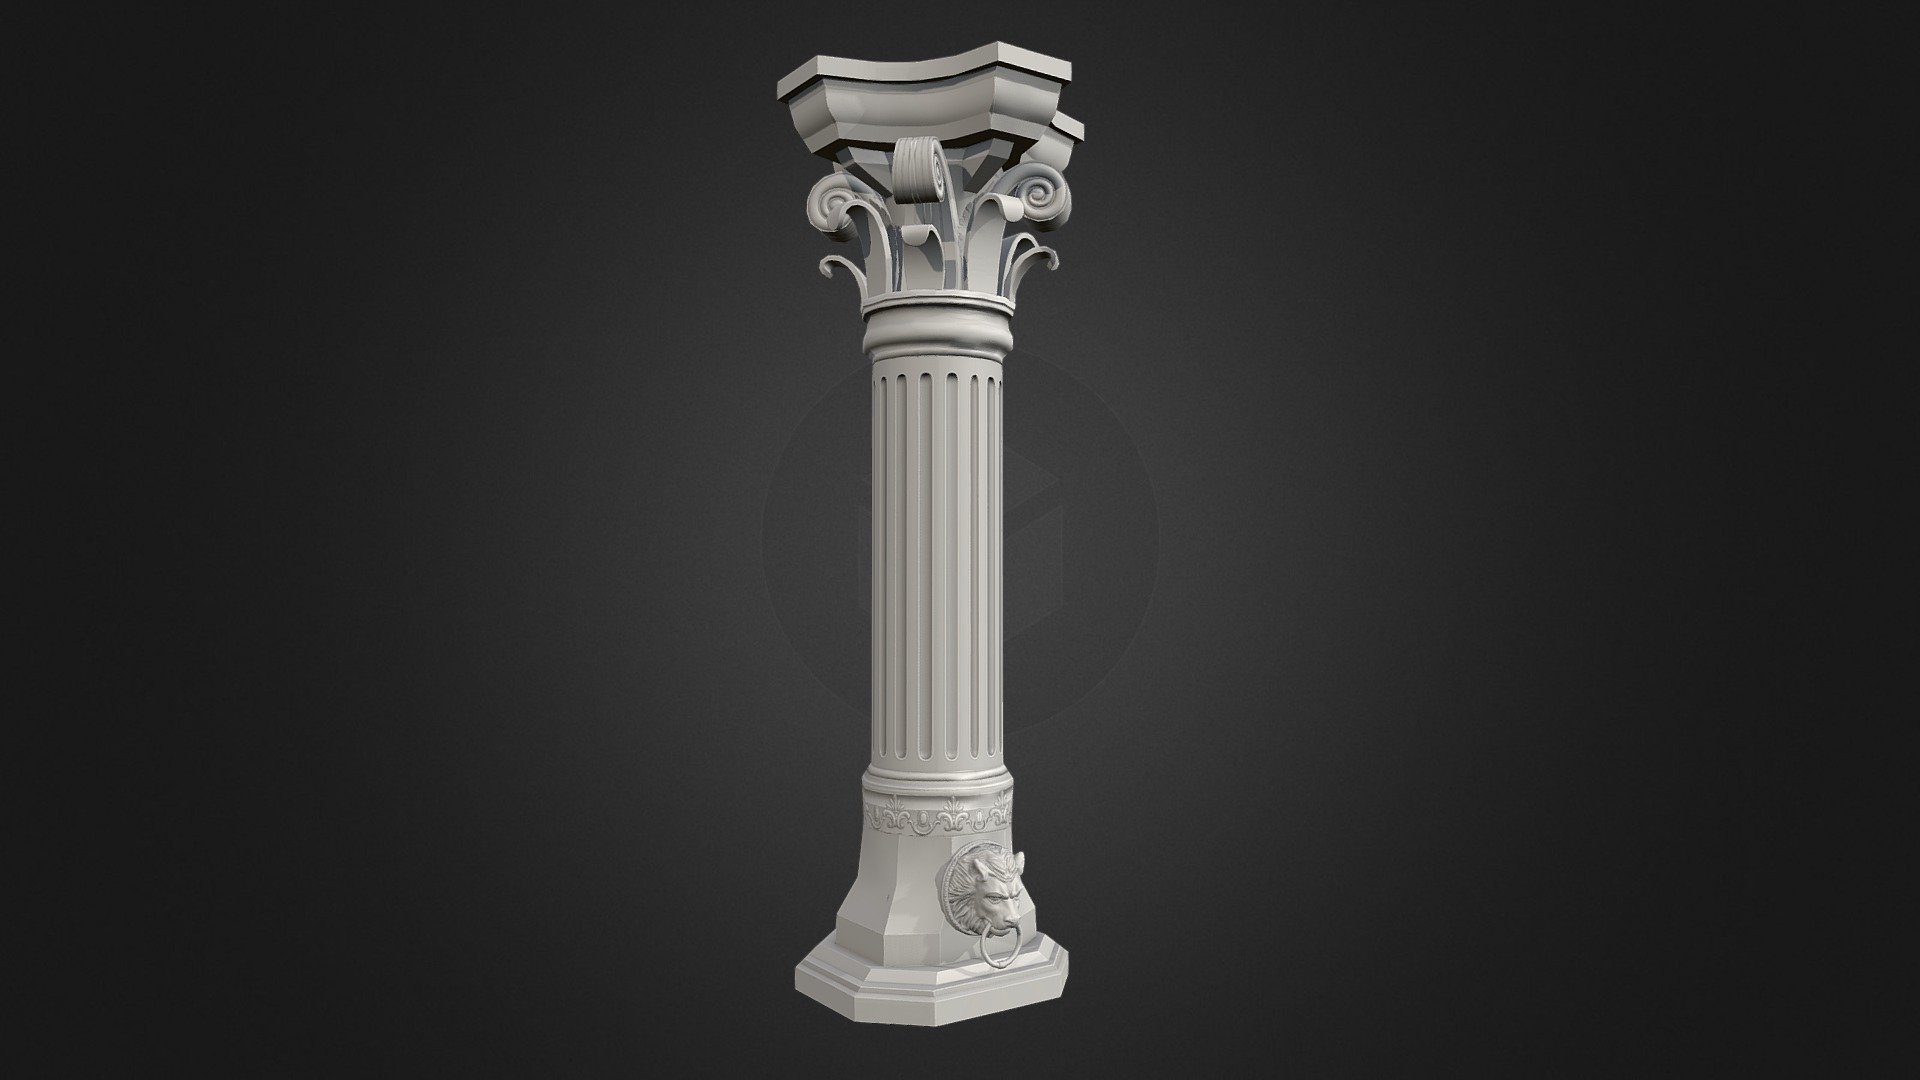 Sculpting : ZBrush / 3dsMax

Retopo : 3D-Coat

Baking : Substance Painter - Graveyard Props : Pillar - 3D model by hansolocambo 3d model